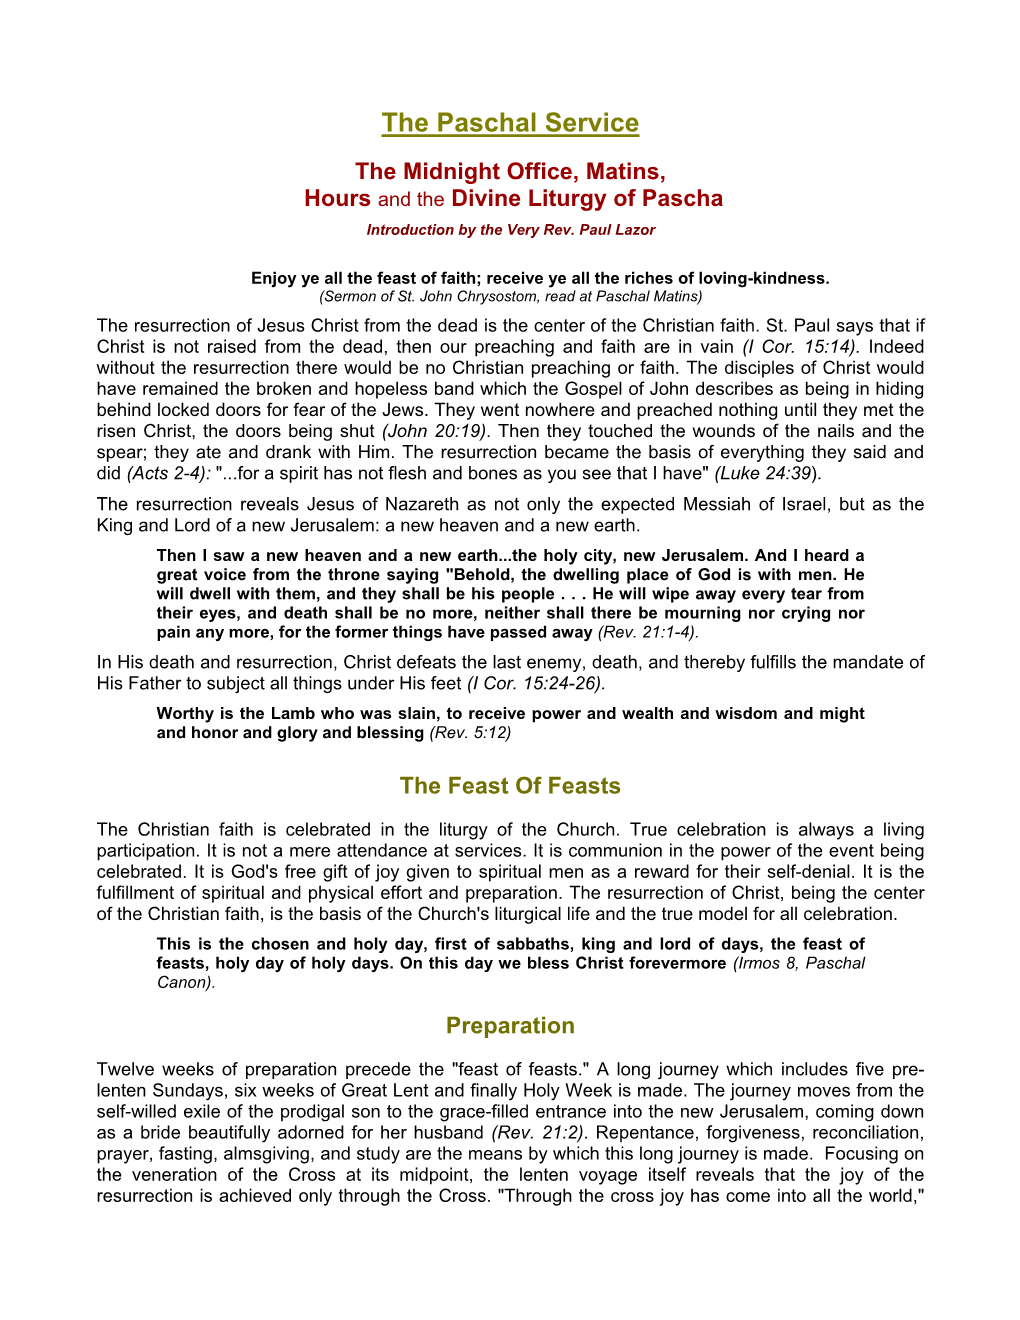 The Paschal Service (PDF)